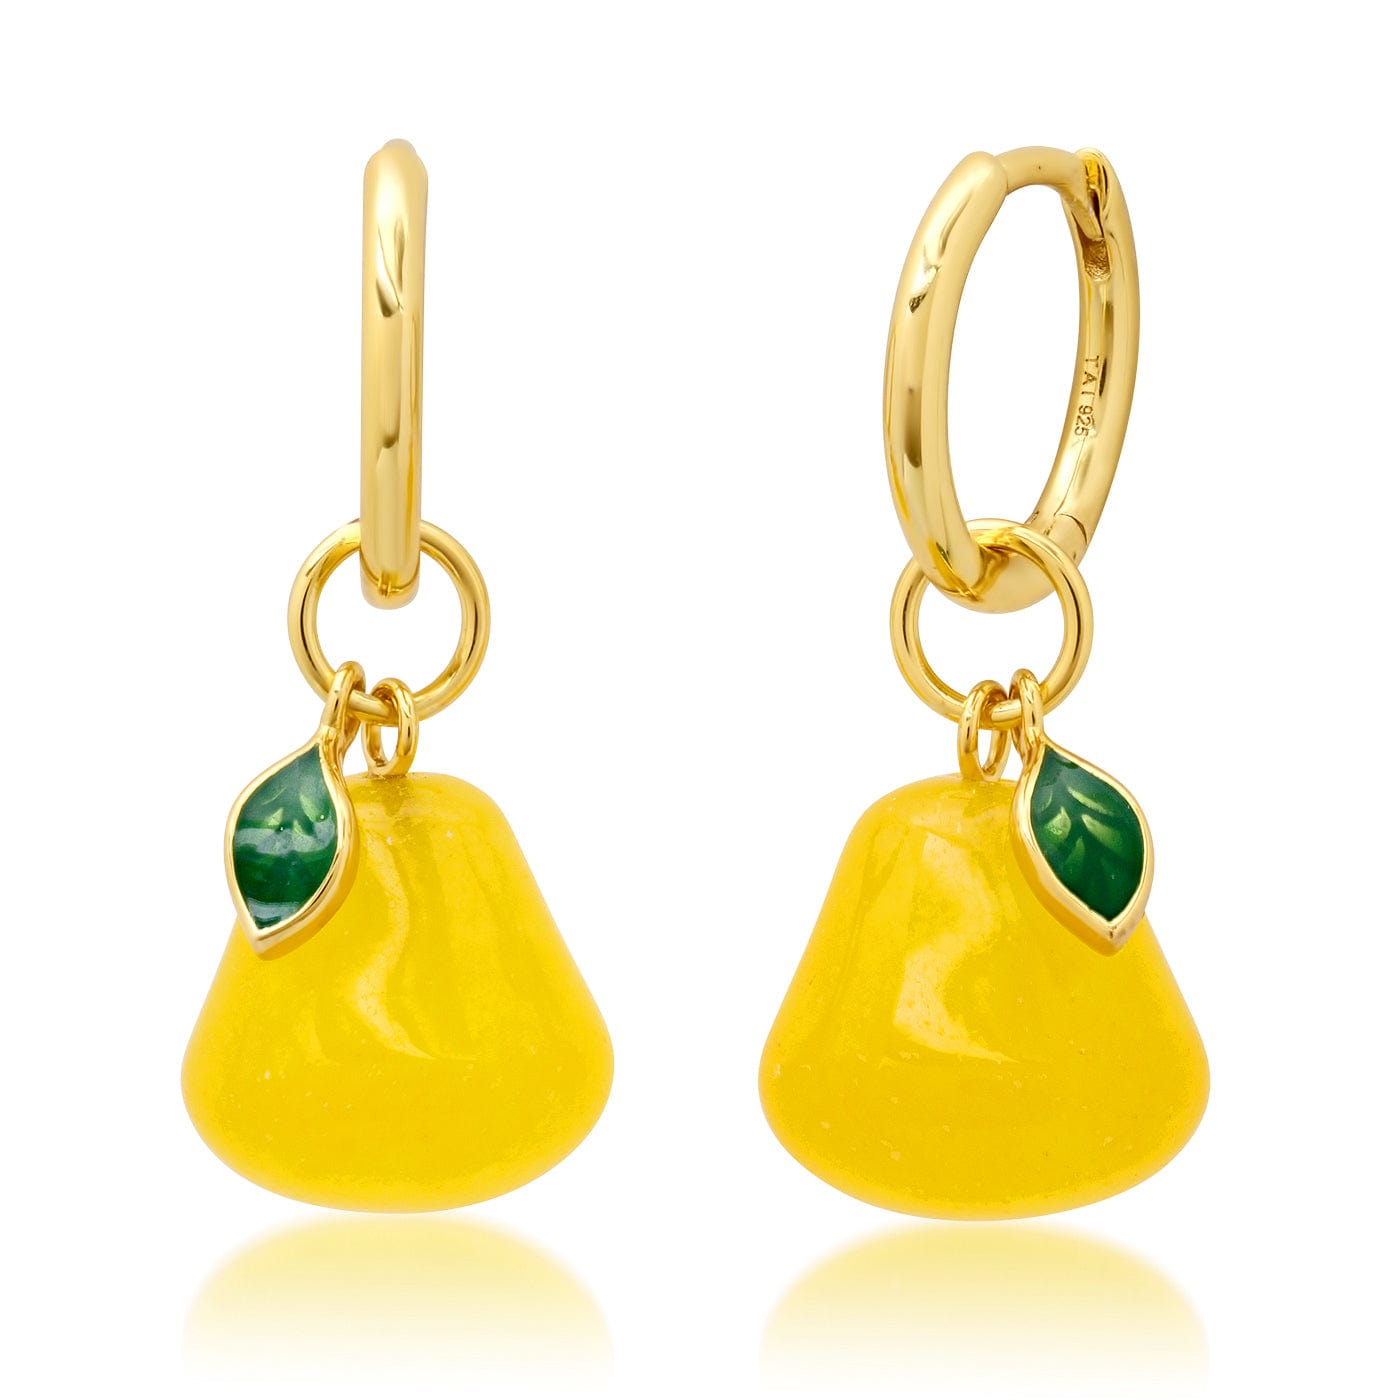 TAI JEWELRY Earrings Pear Charm Huggies